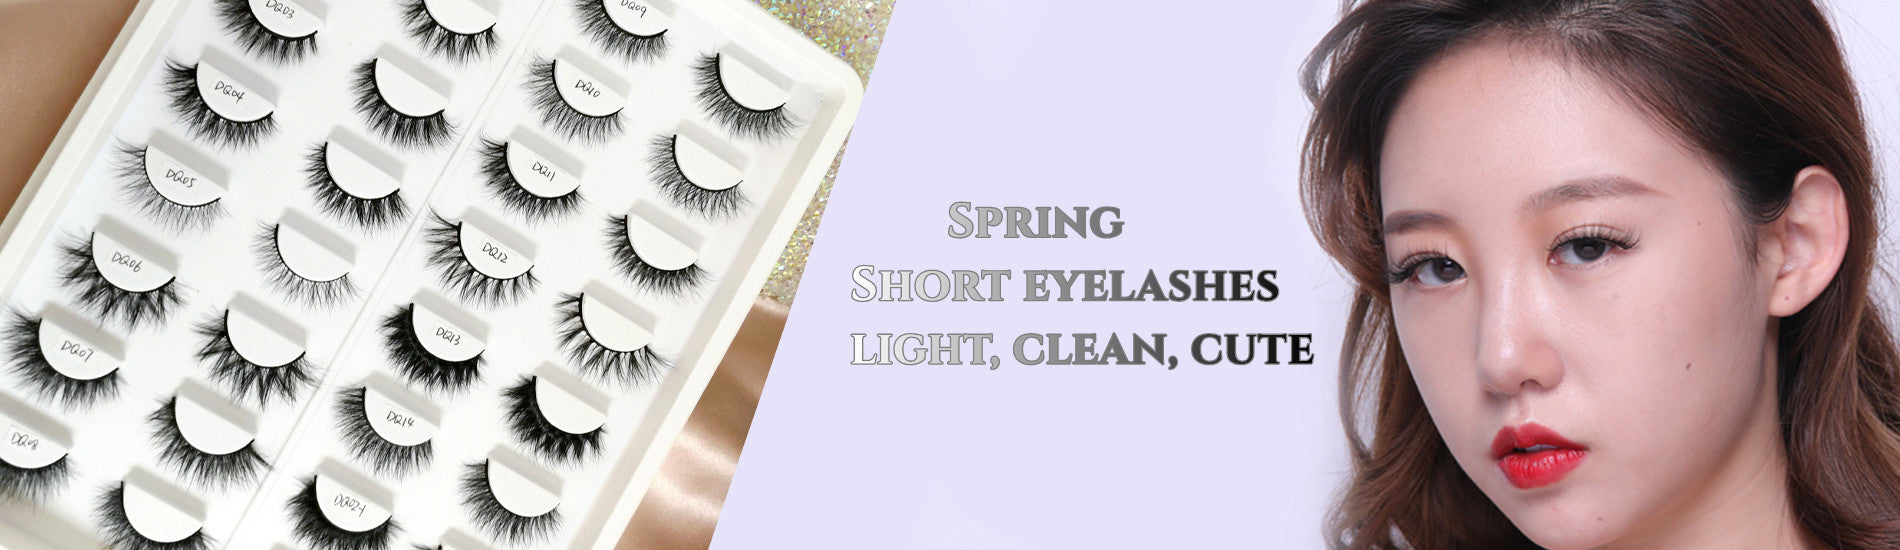 spring short eyelashes vendors